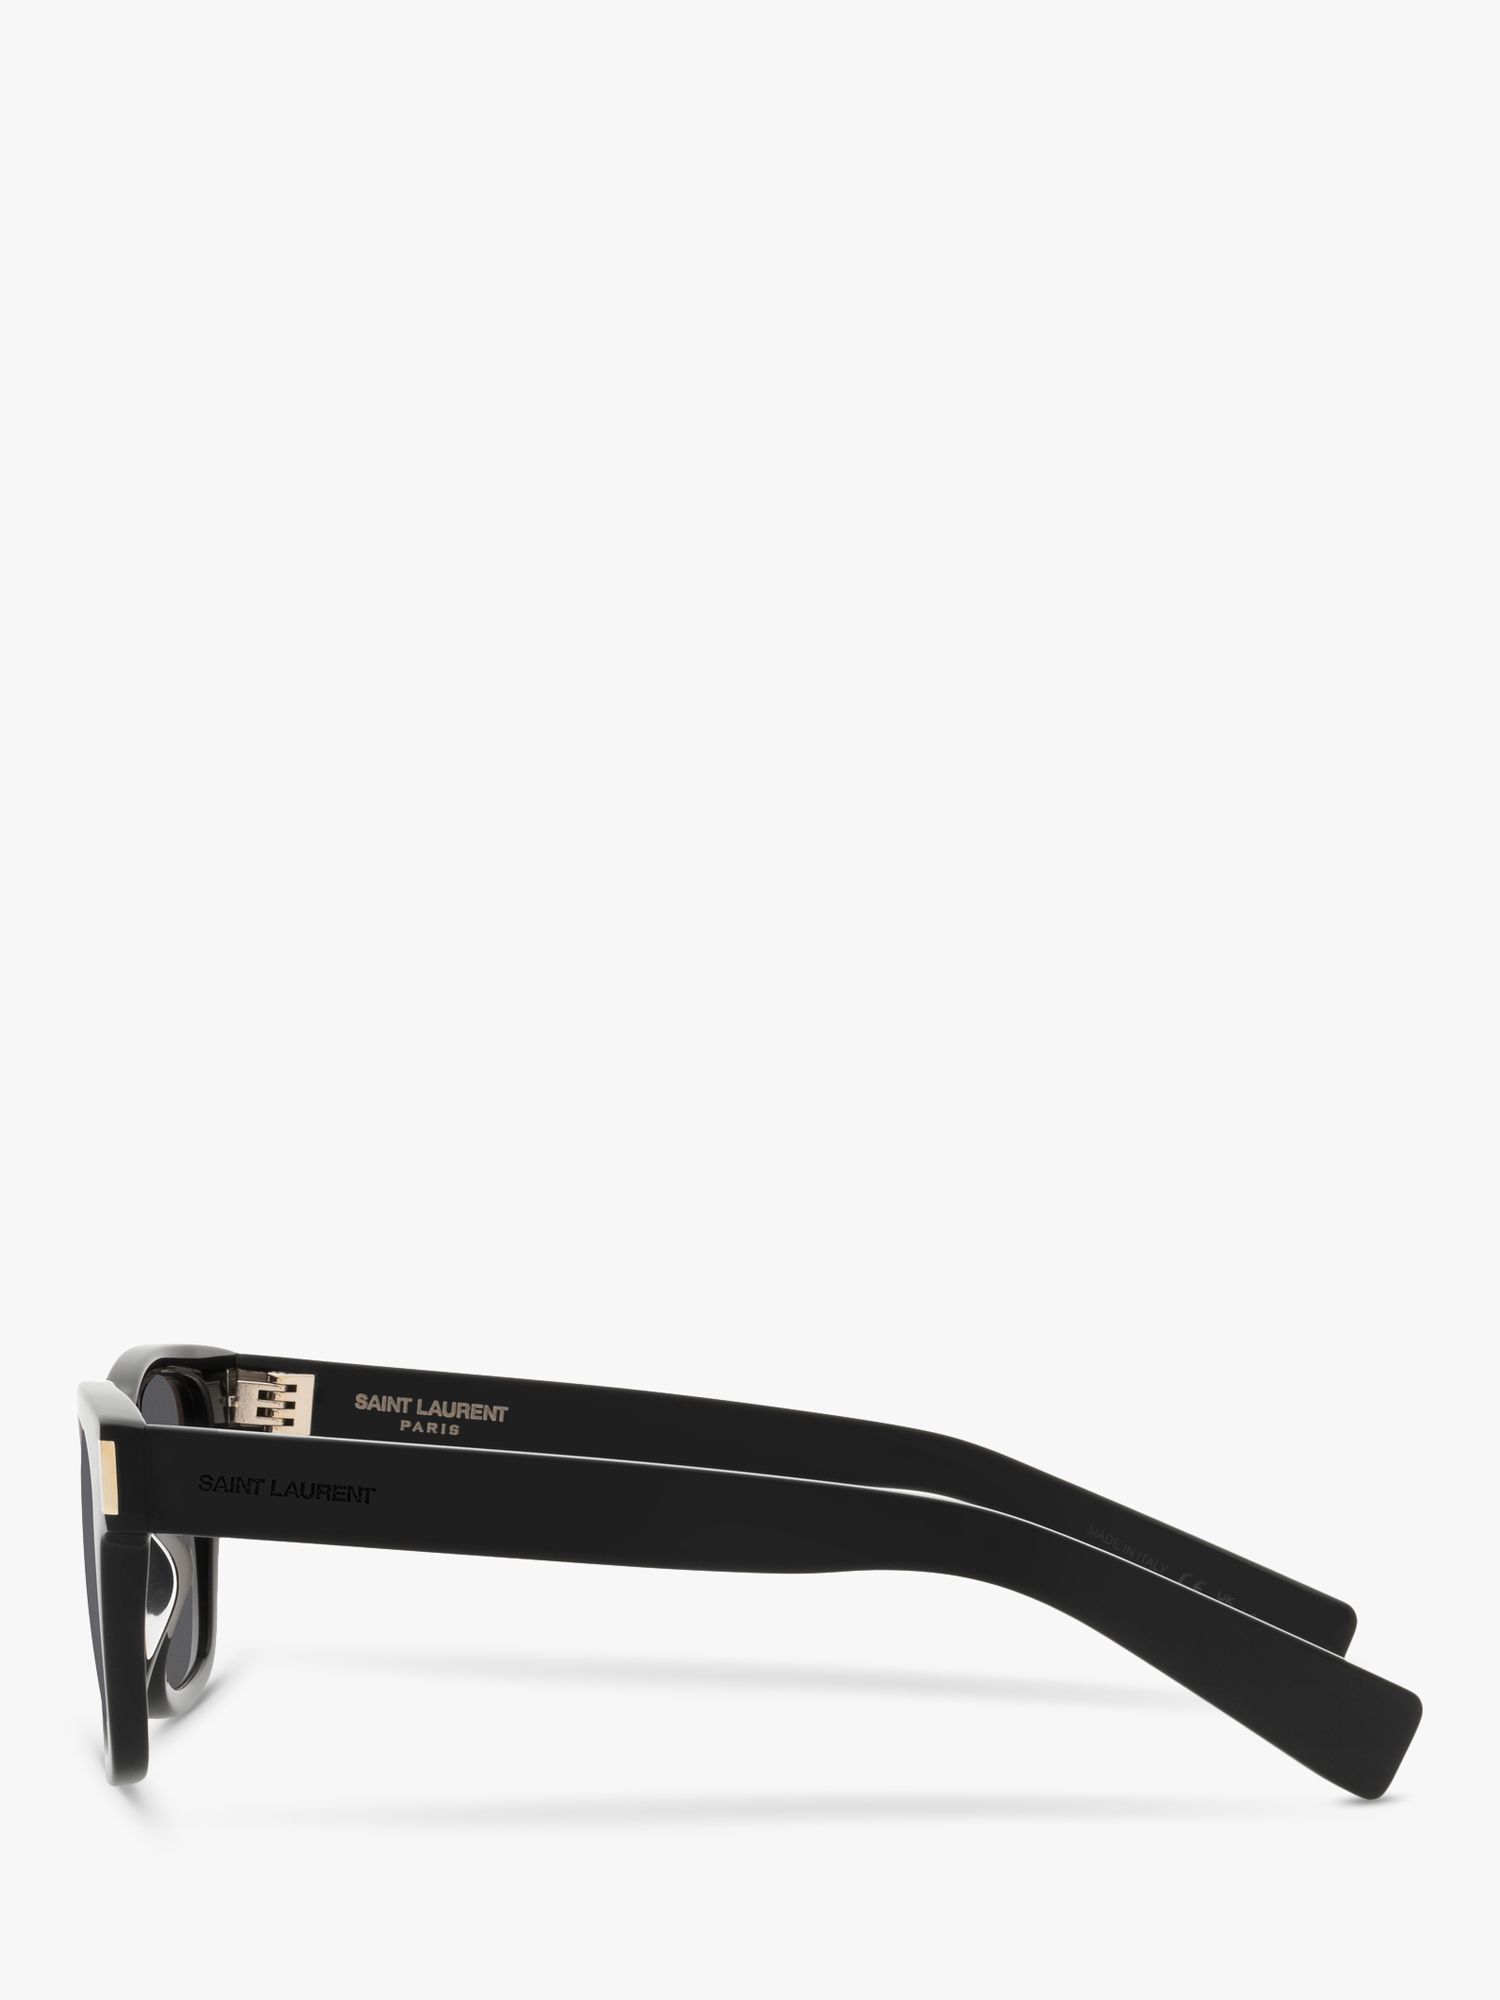 Buy Yves Saint Laurent YS000429 Rectangular Sunglasses, Black Online at johnlewis.com